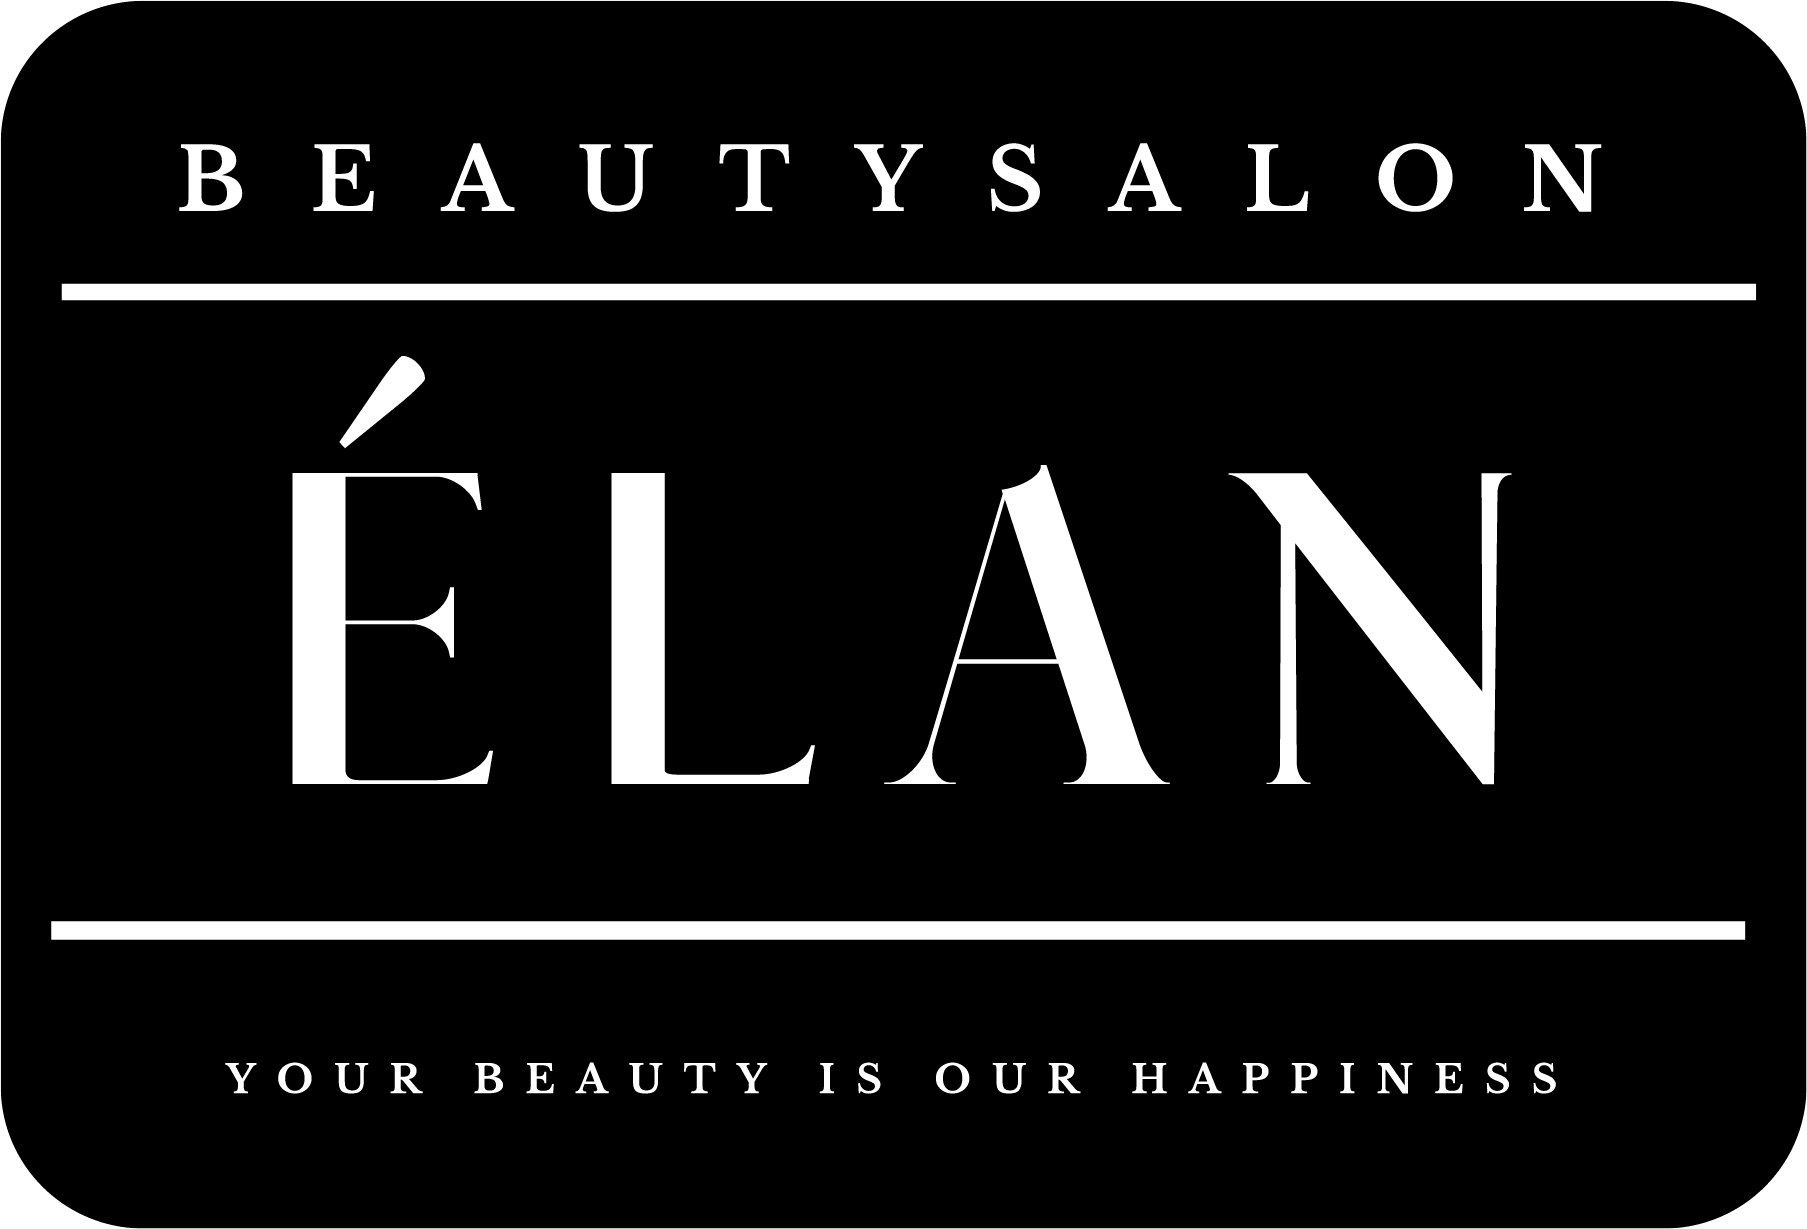 Beautysalon Elan Mussel Groningen, Your Beauty, Our Happiness!